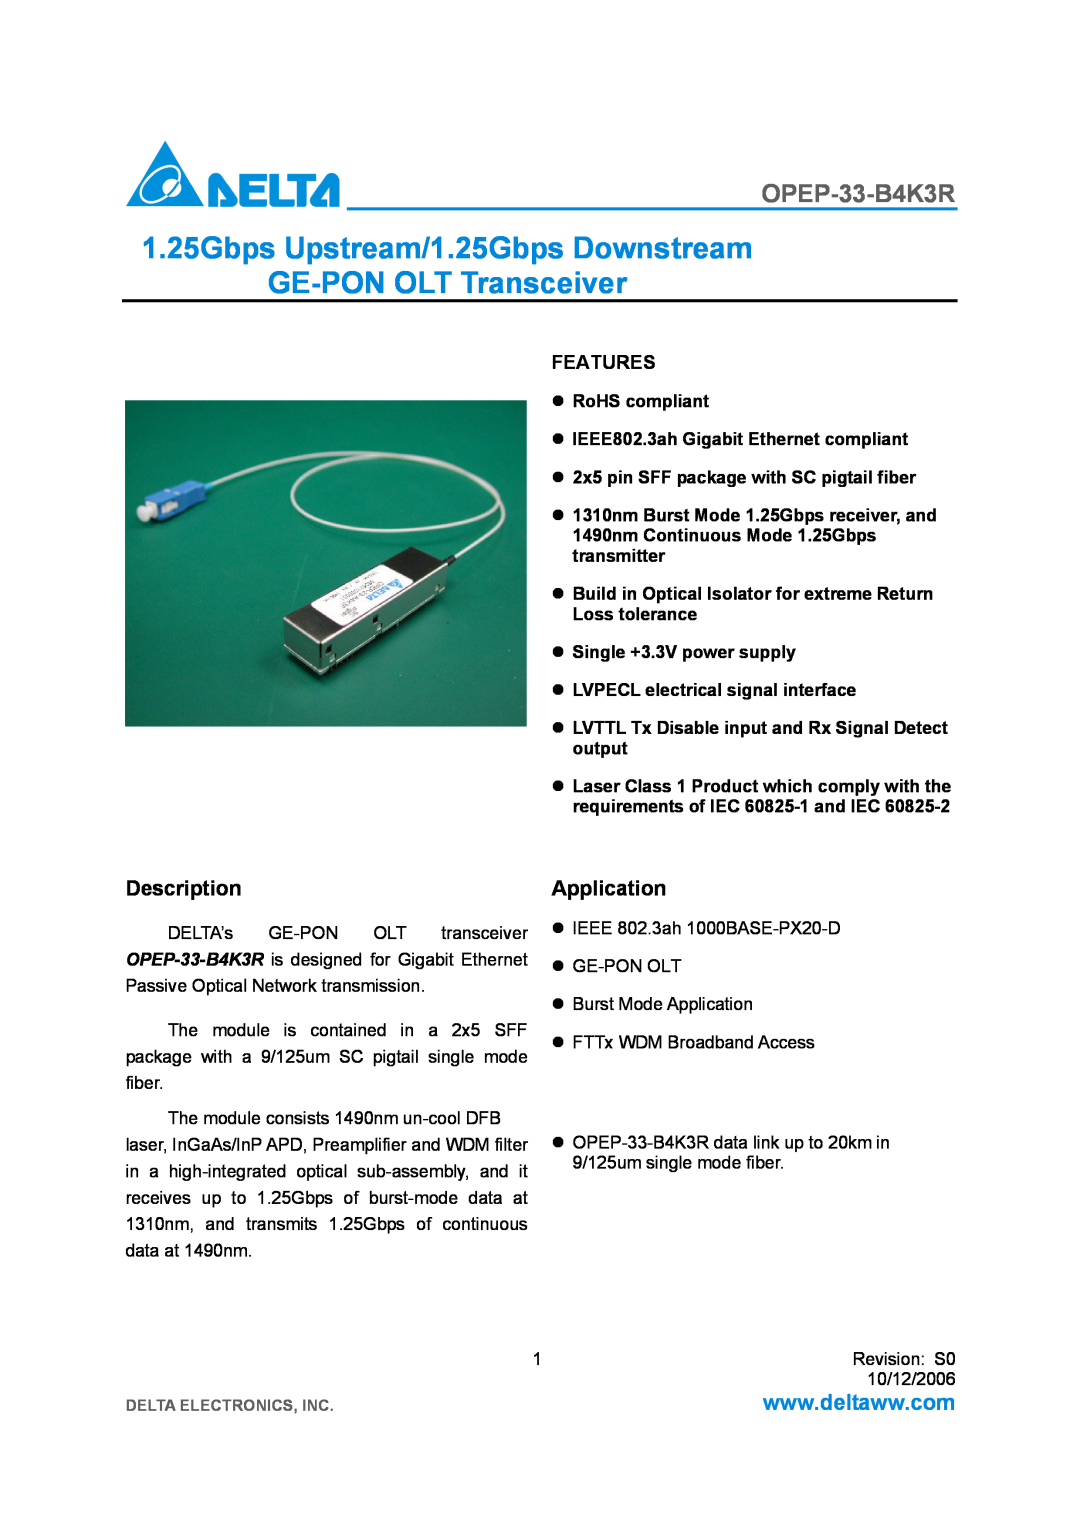 Delta Electronics OPEP-33-B4K3R manual Description, Application, Features 